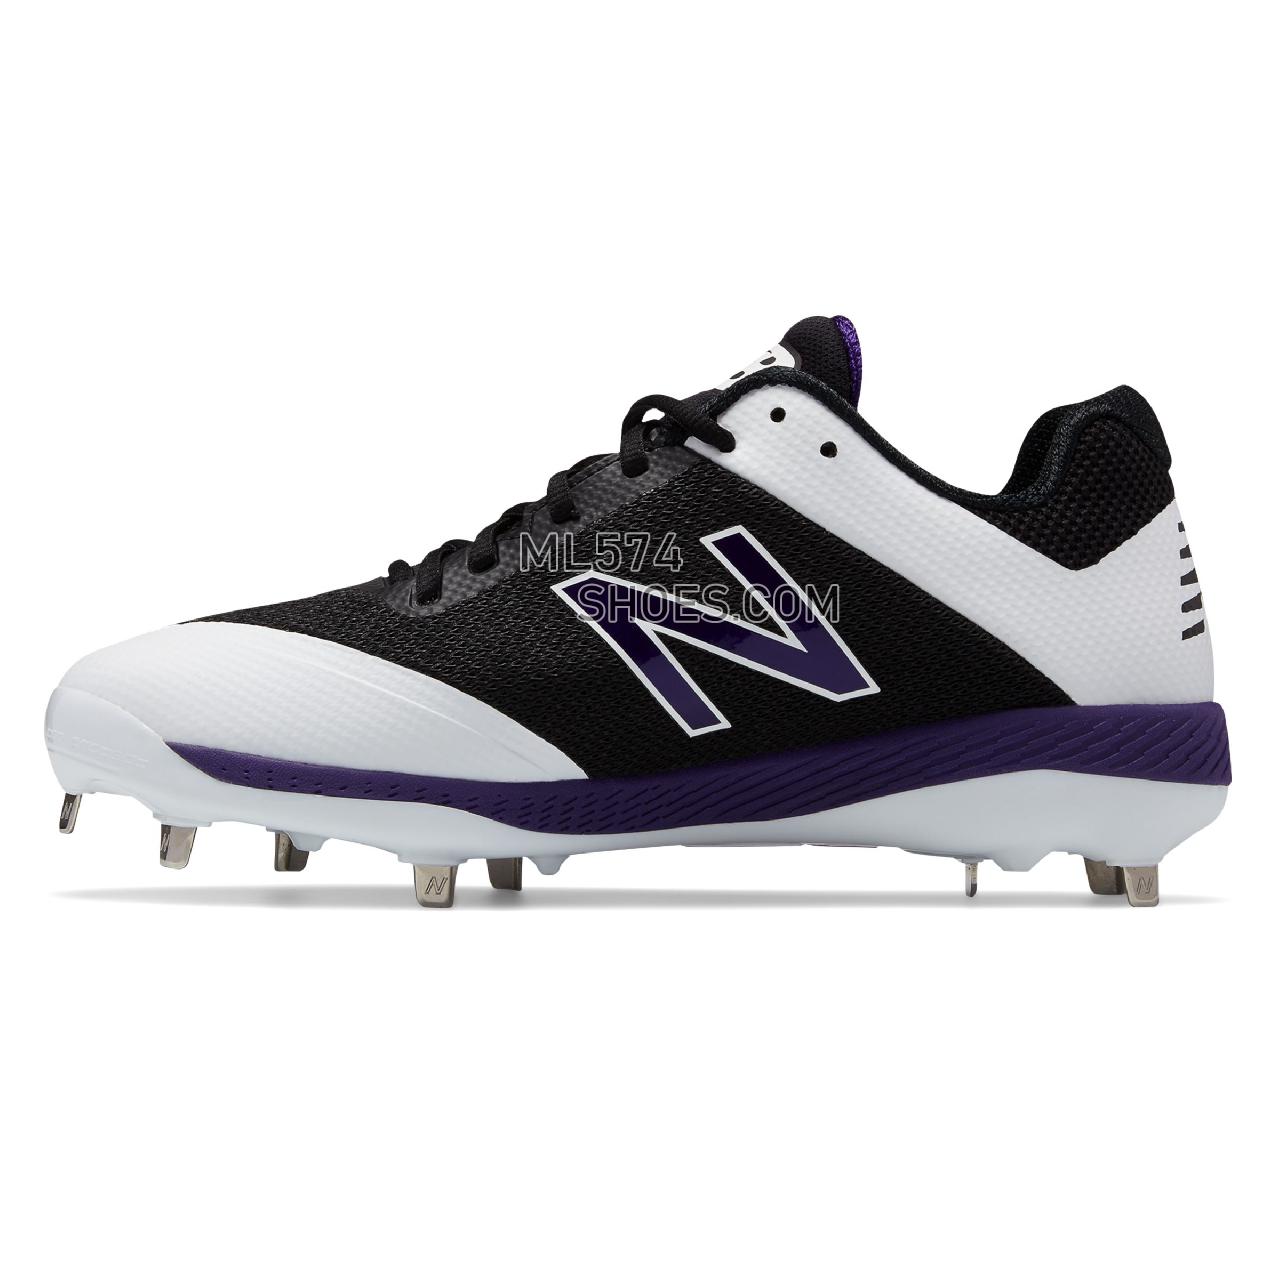 New Balance 4040v4 - Men's 4040 - Baseball Black with Purple - L4040BP4